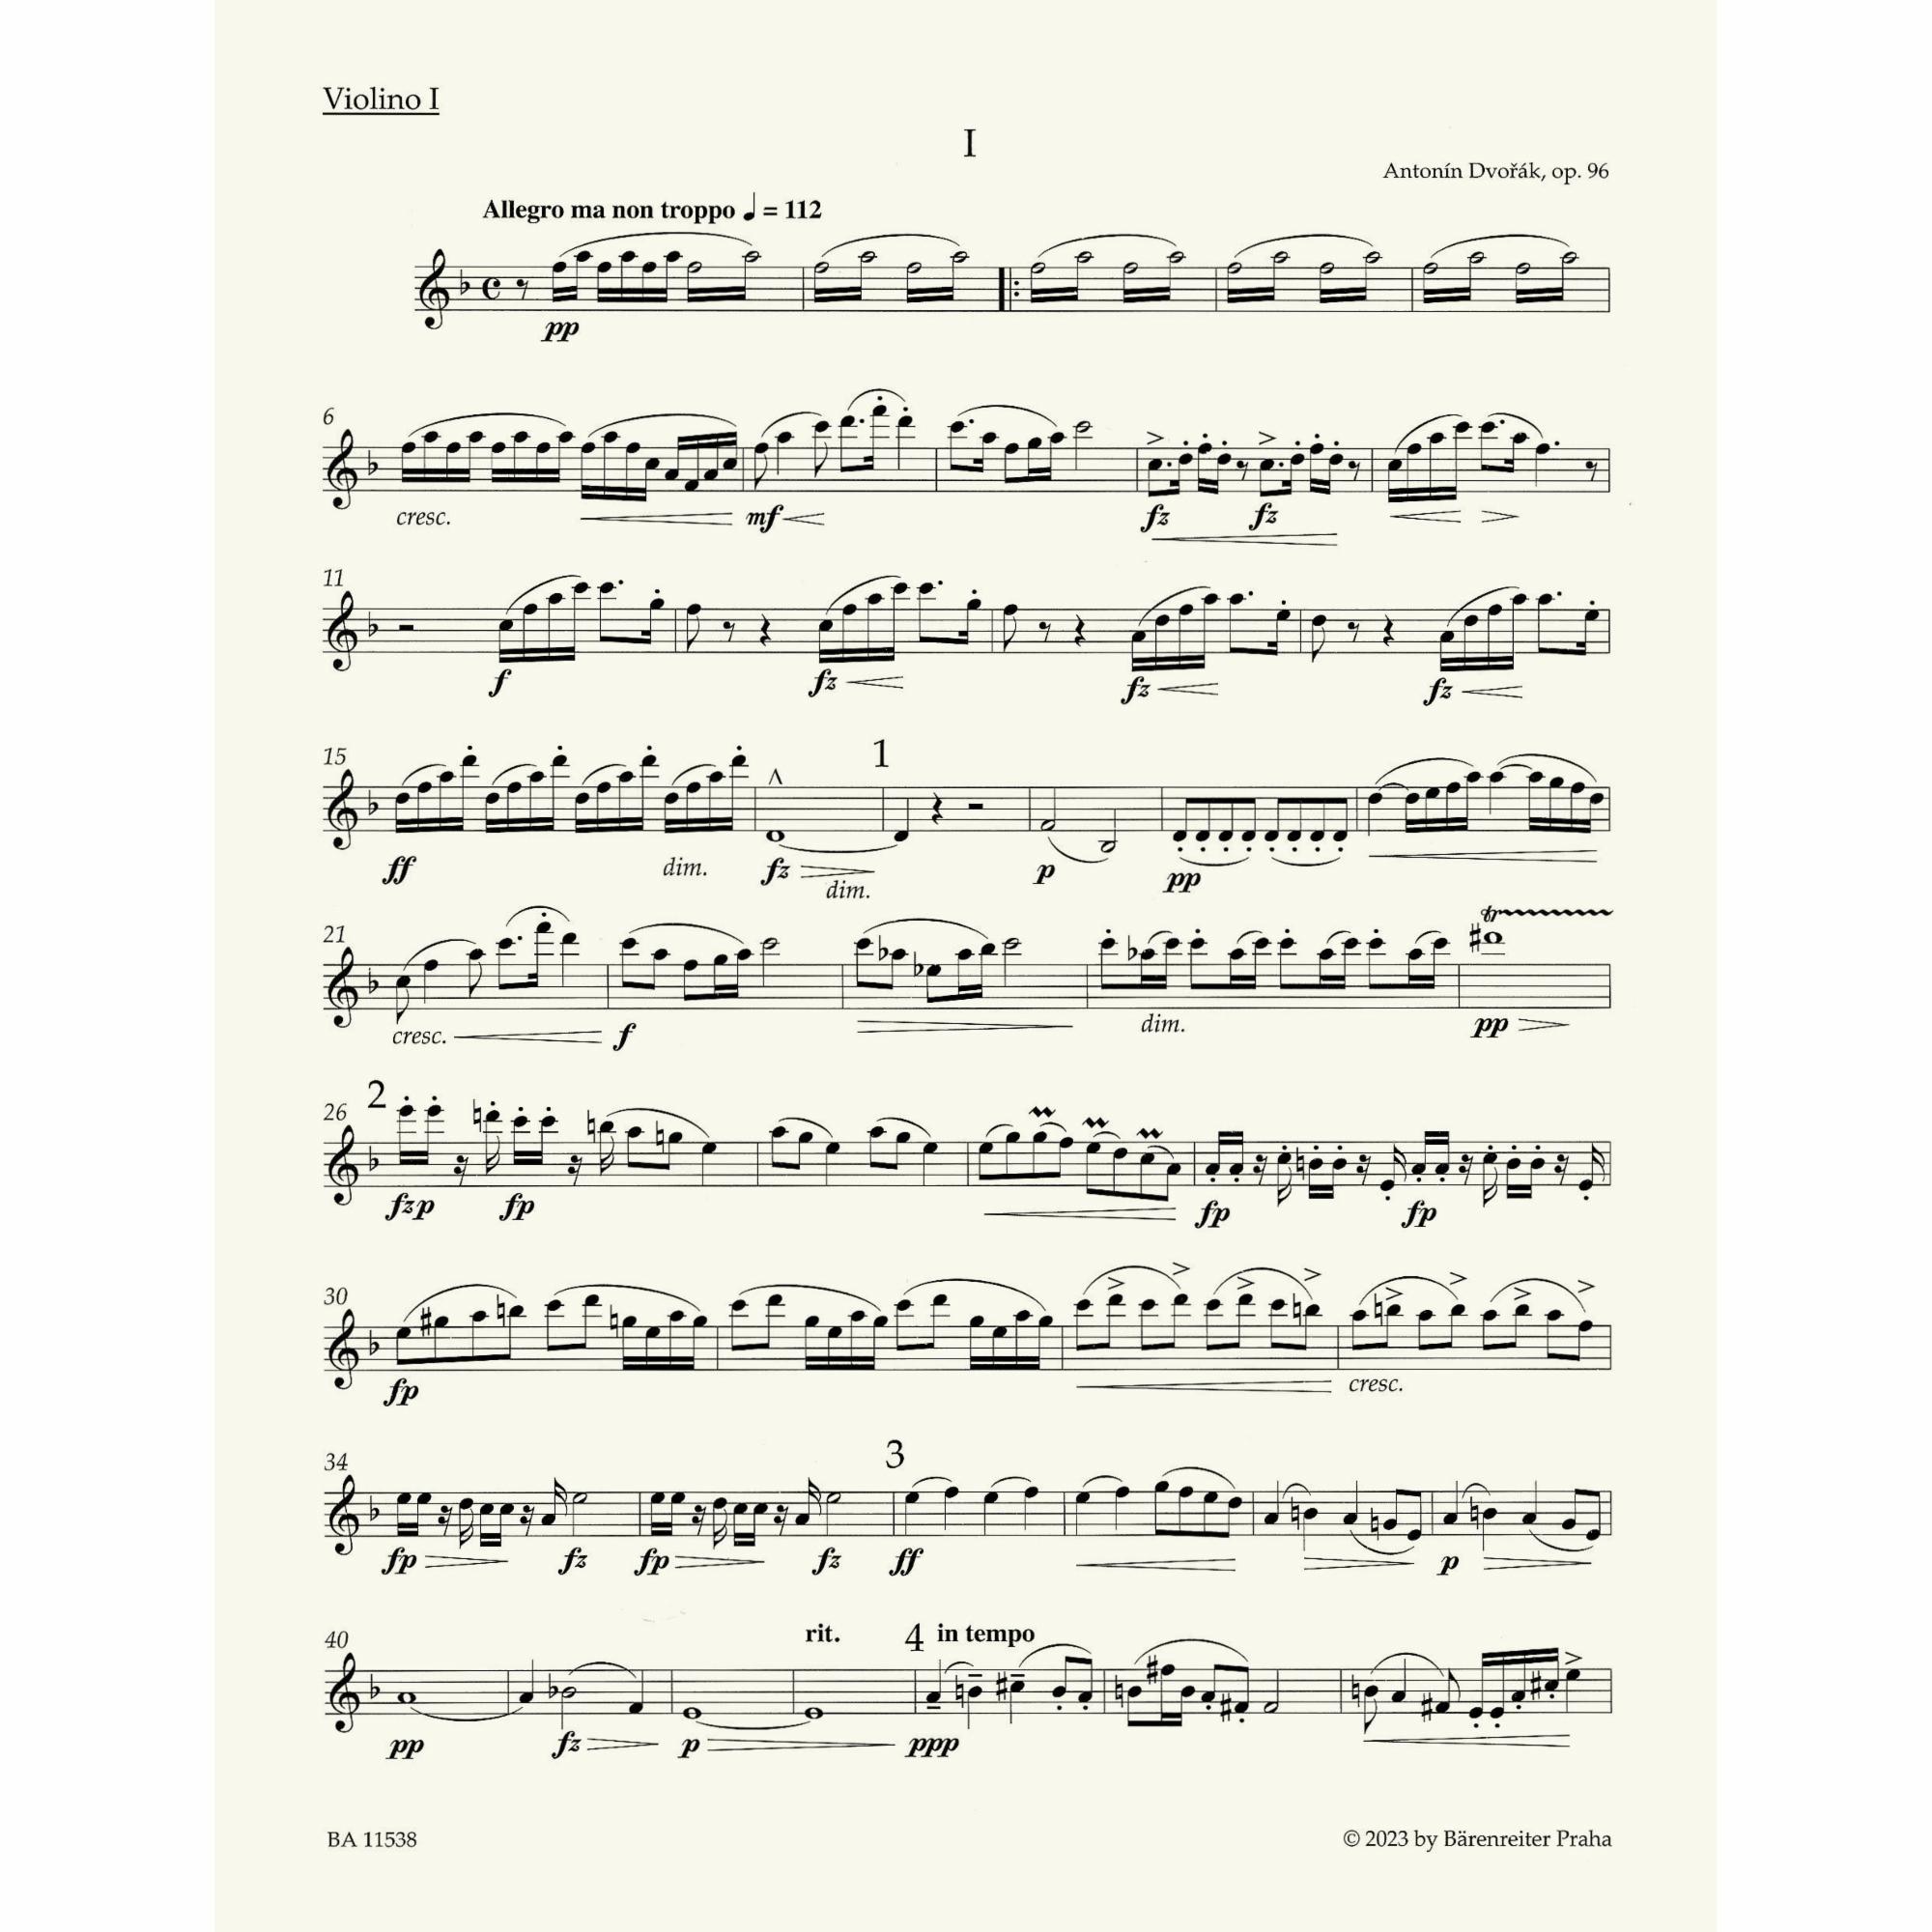 Sample: Violin I Part 